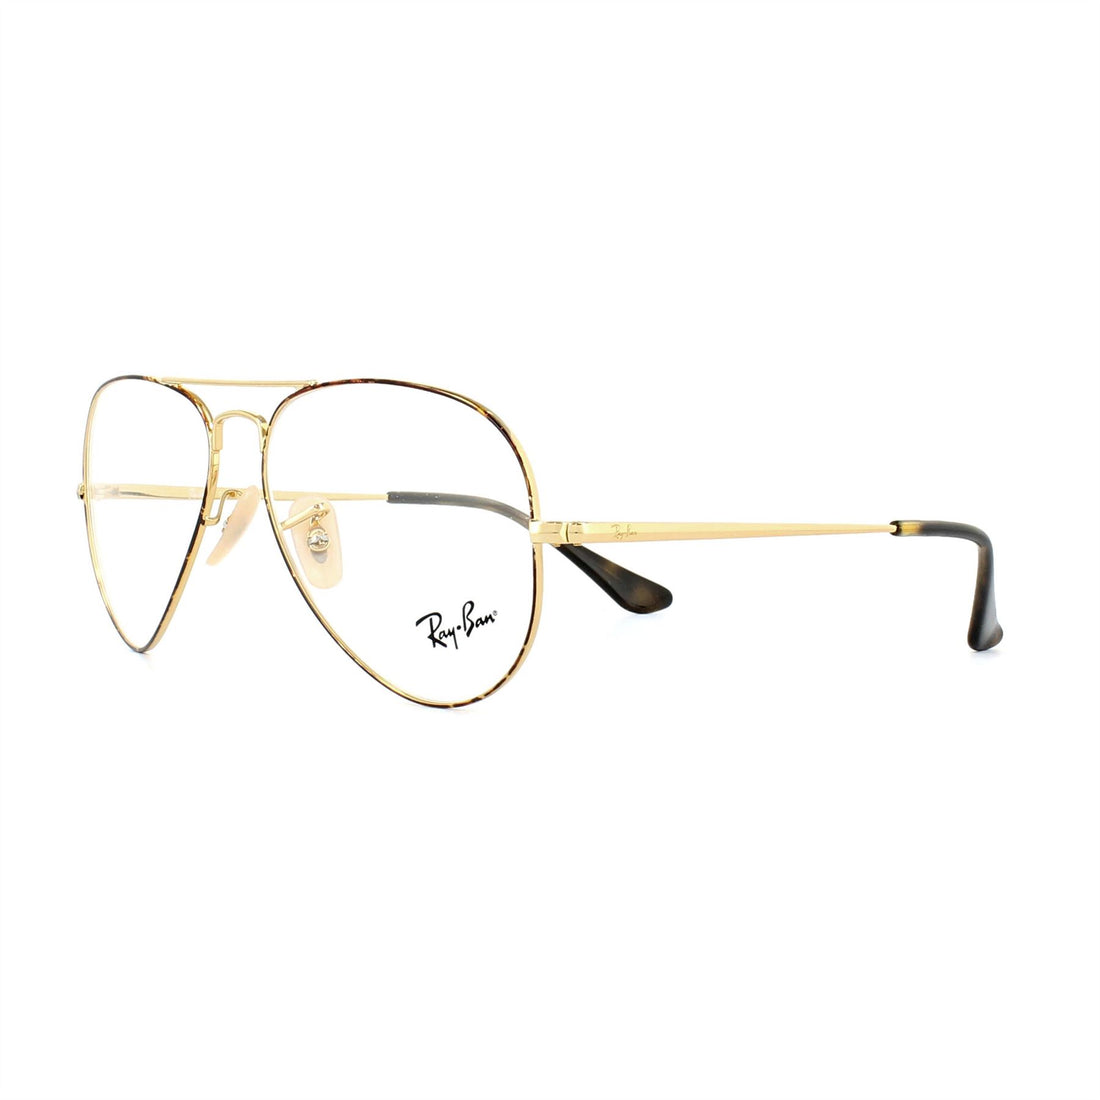 Ray-Ban 6489 Aviator Glasses Frames Gold Top on Havana 58